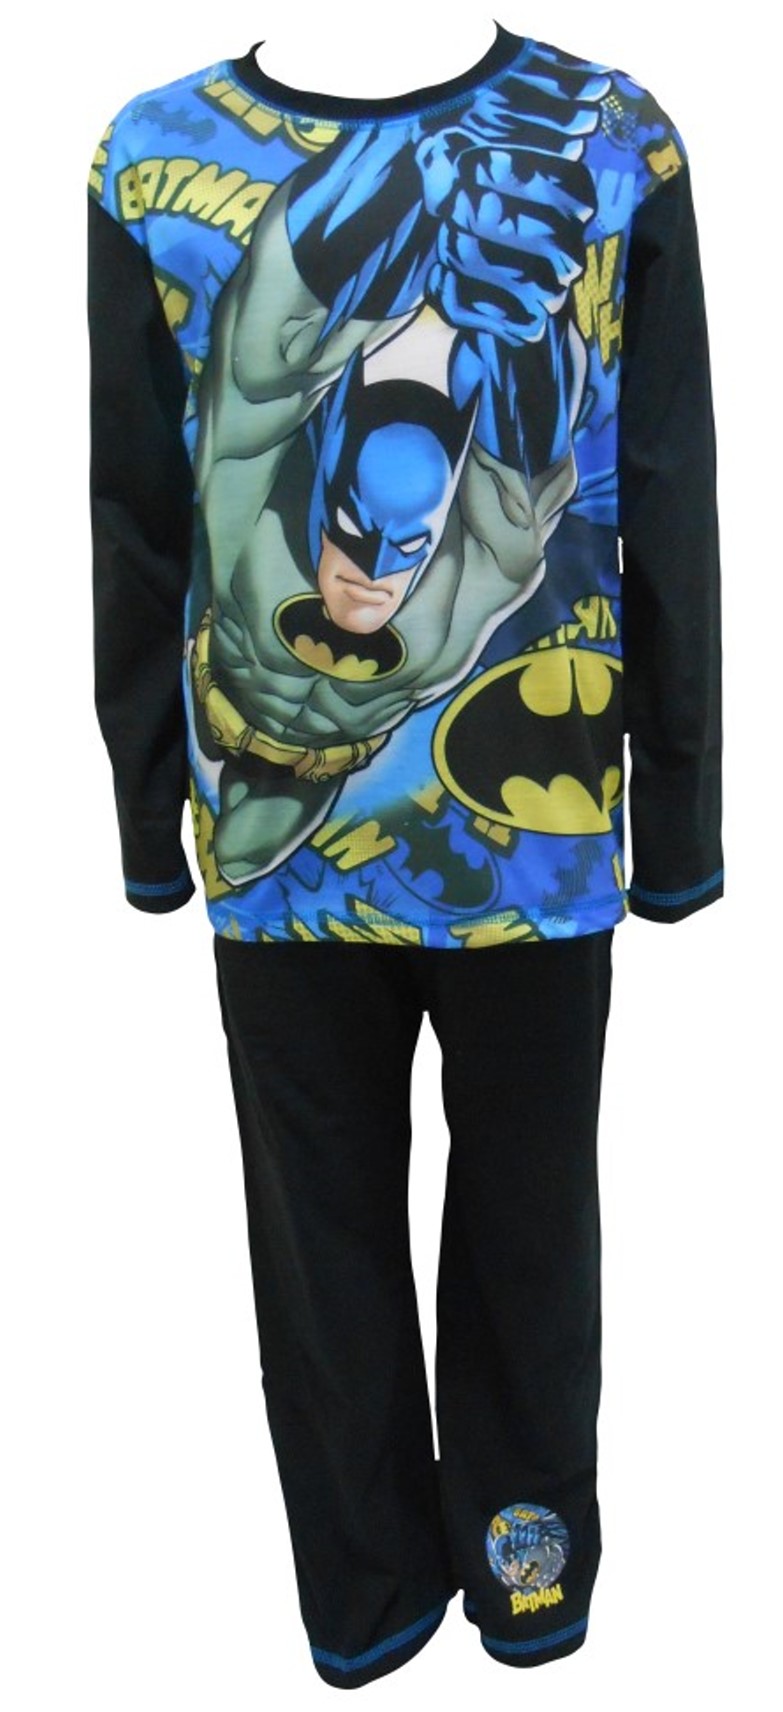 Batman Boys Pyjamas PB249.JPG  by Thingimijigs